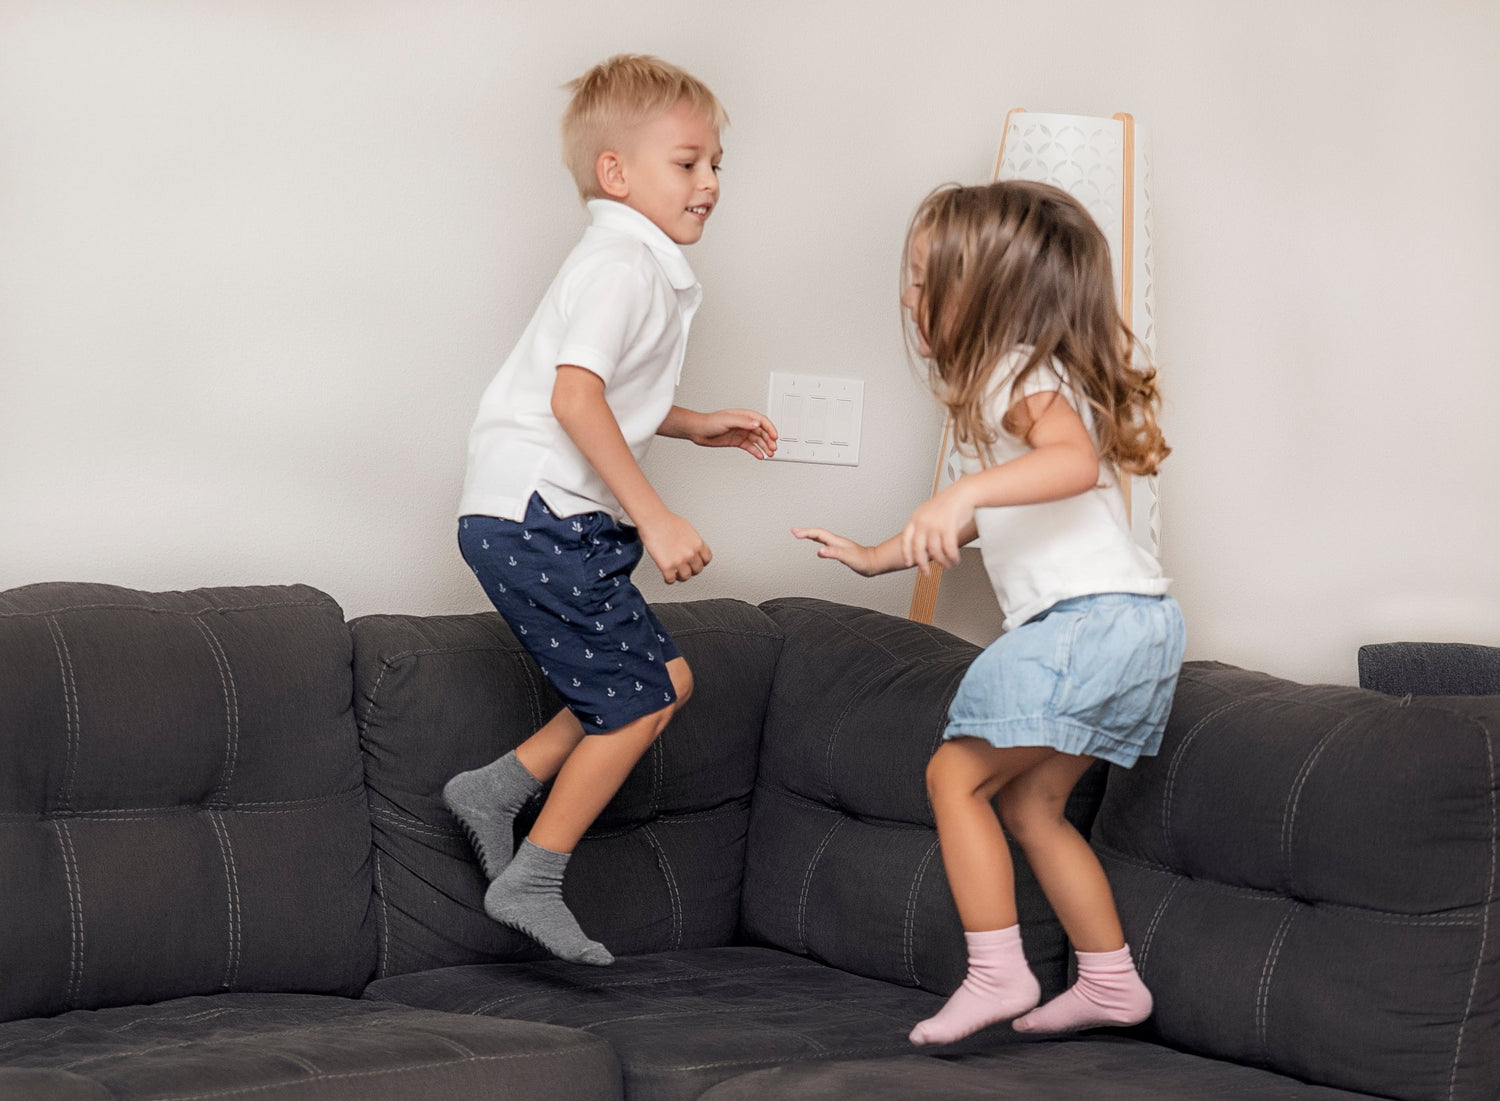 Children playing wearing anti slip socks with tread pattern on the bottom.